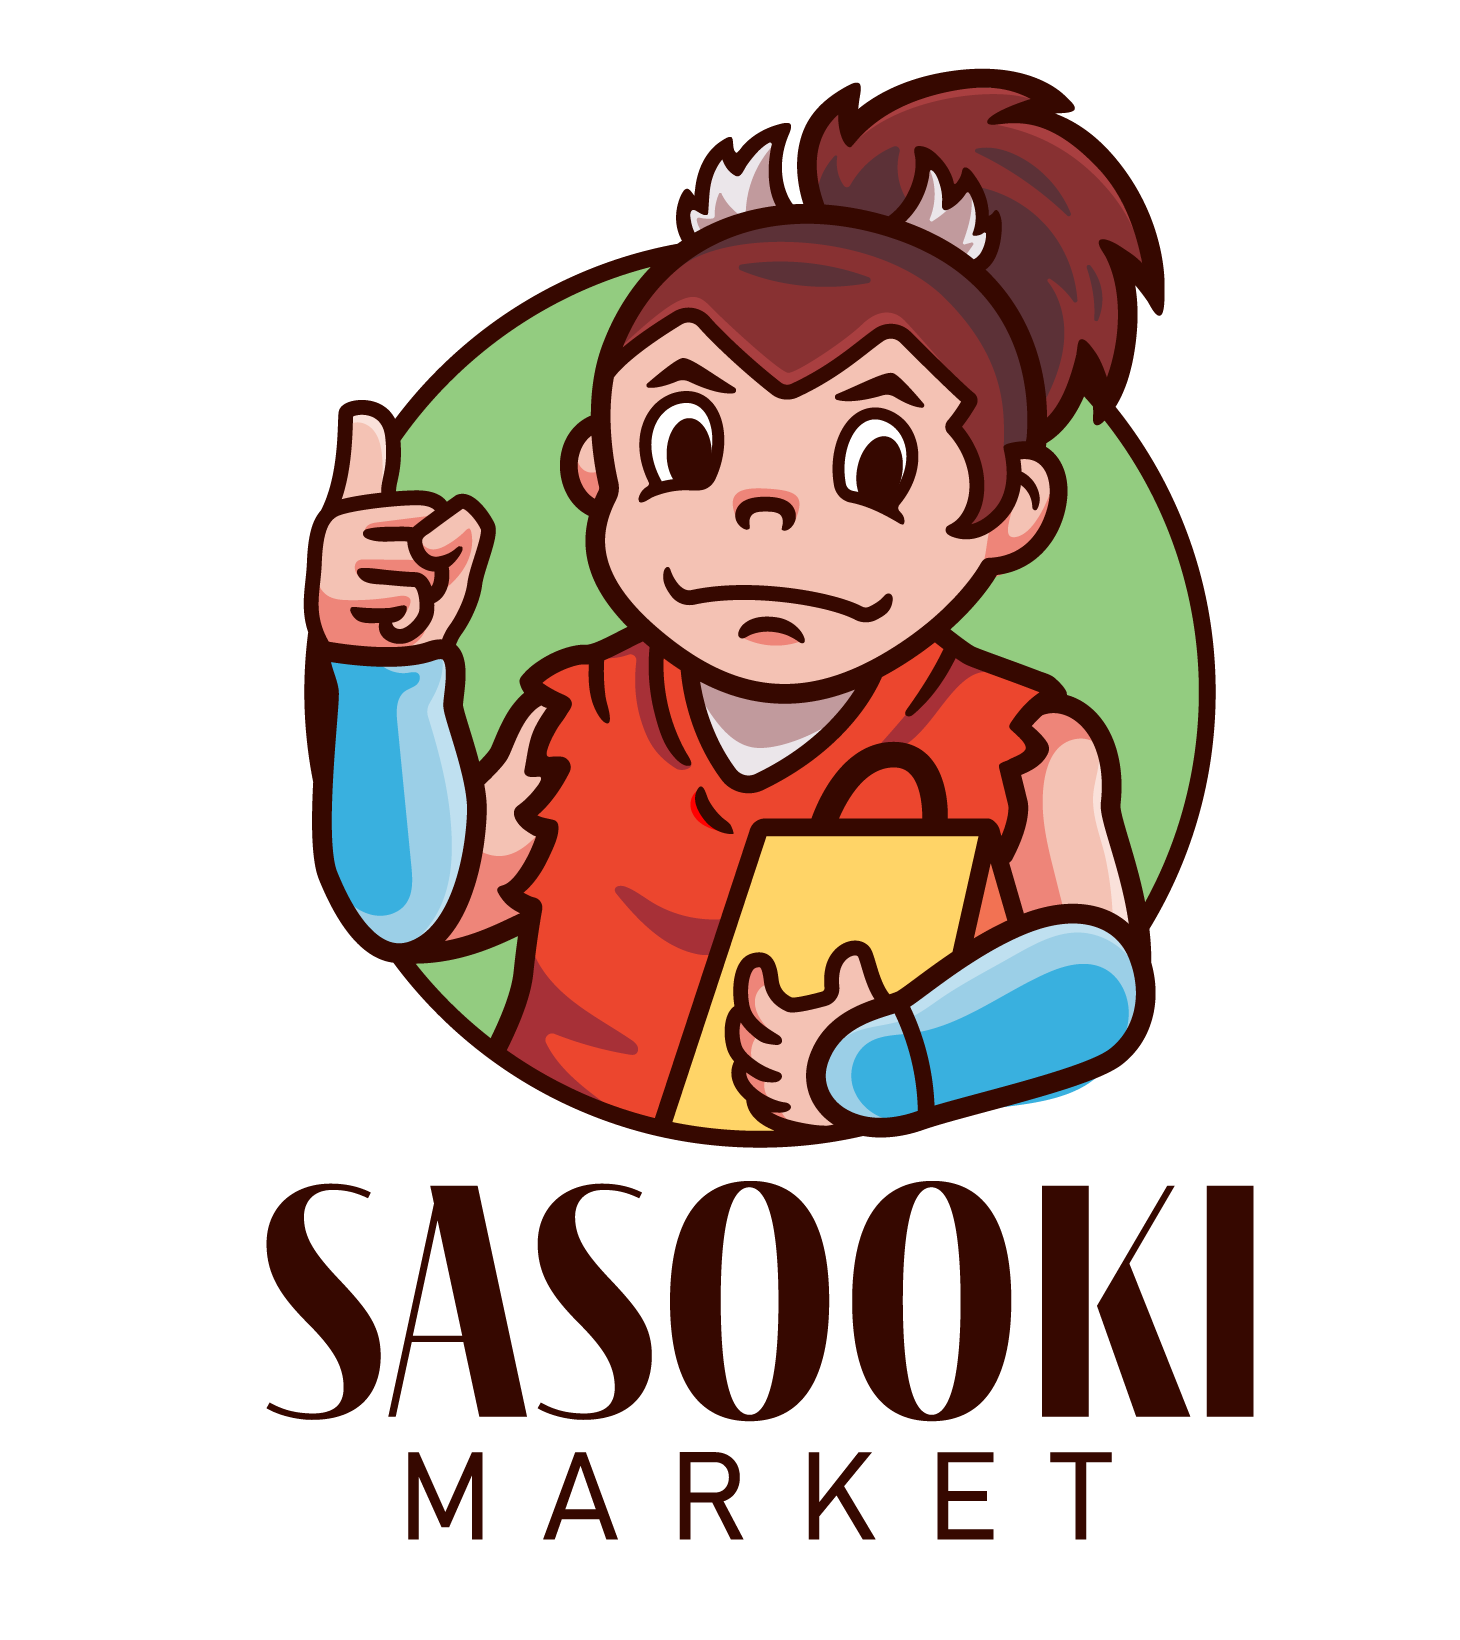 Sassoki